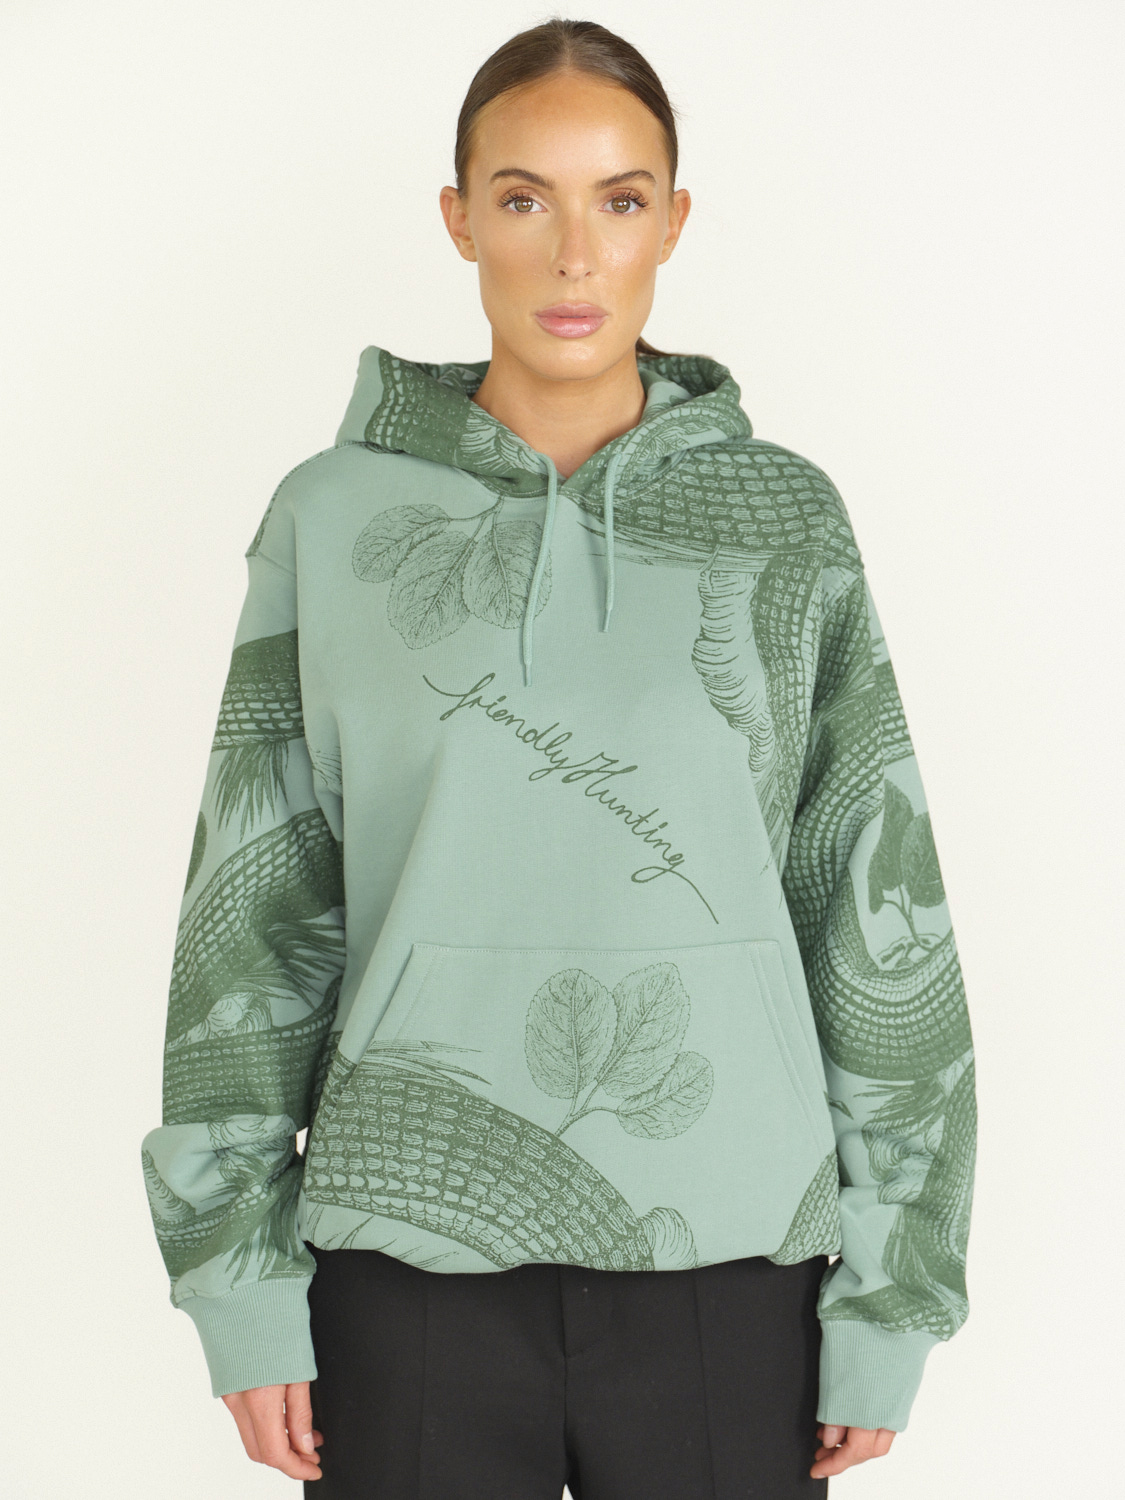 friendly hunting Hoodie Omen Print Garden Eden - cotton hoodie with allover print  green S